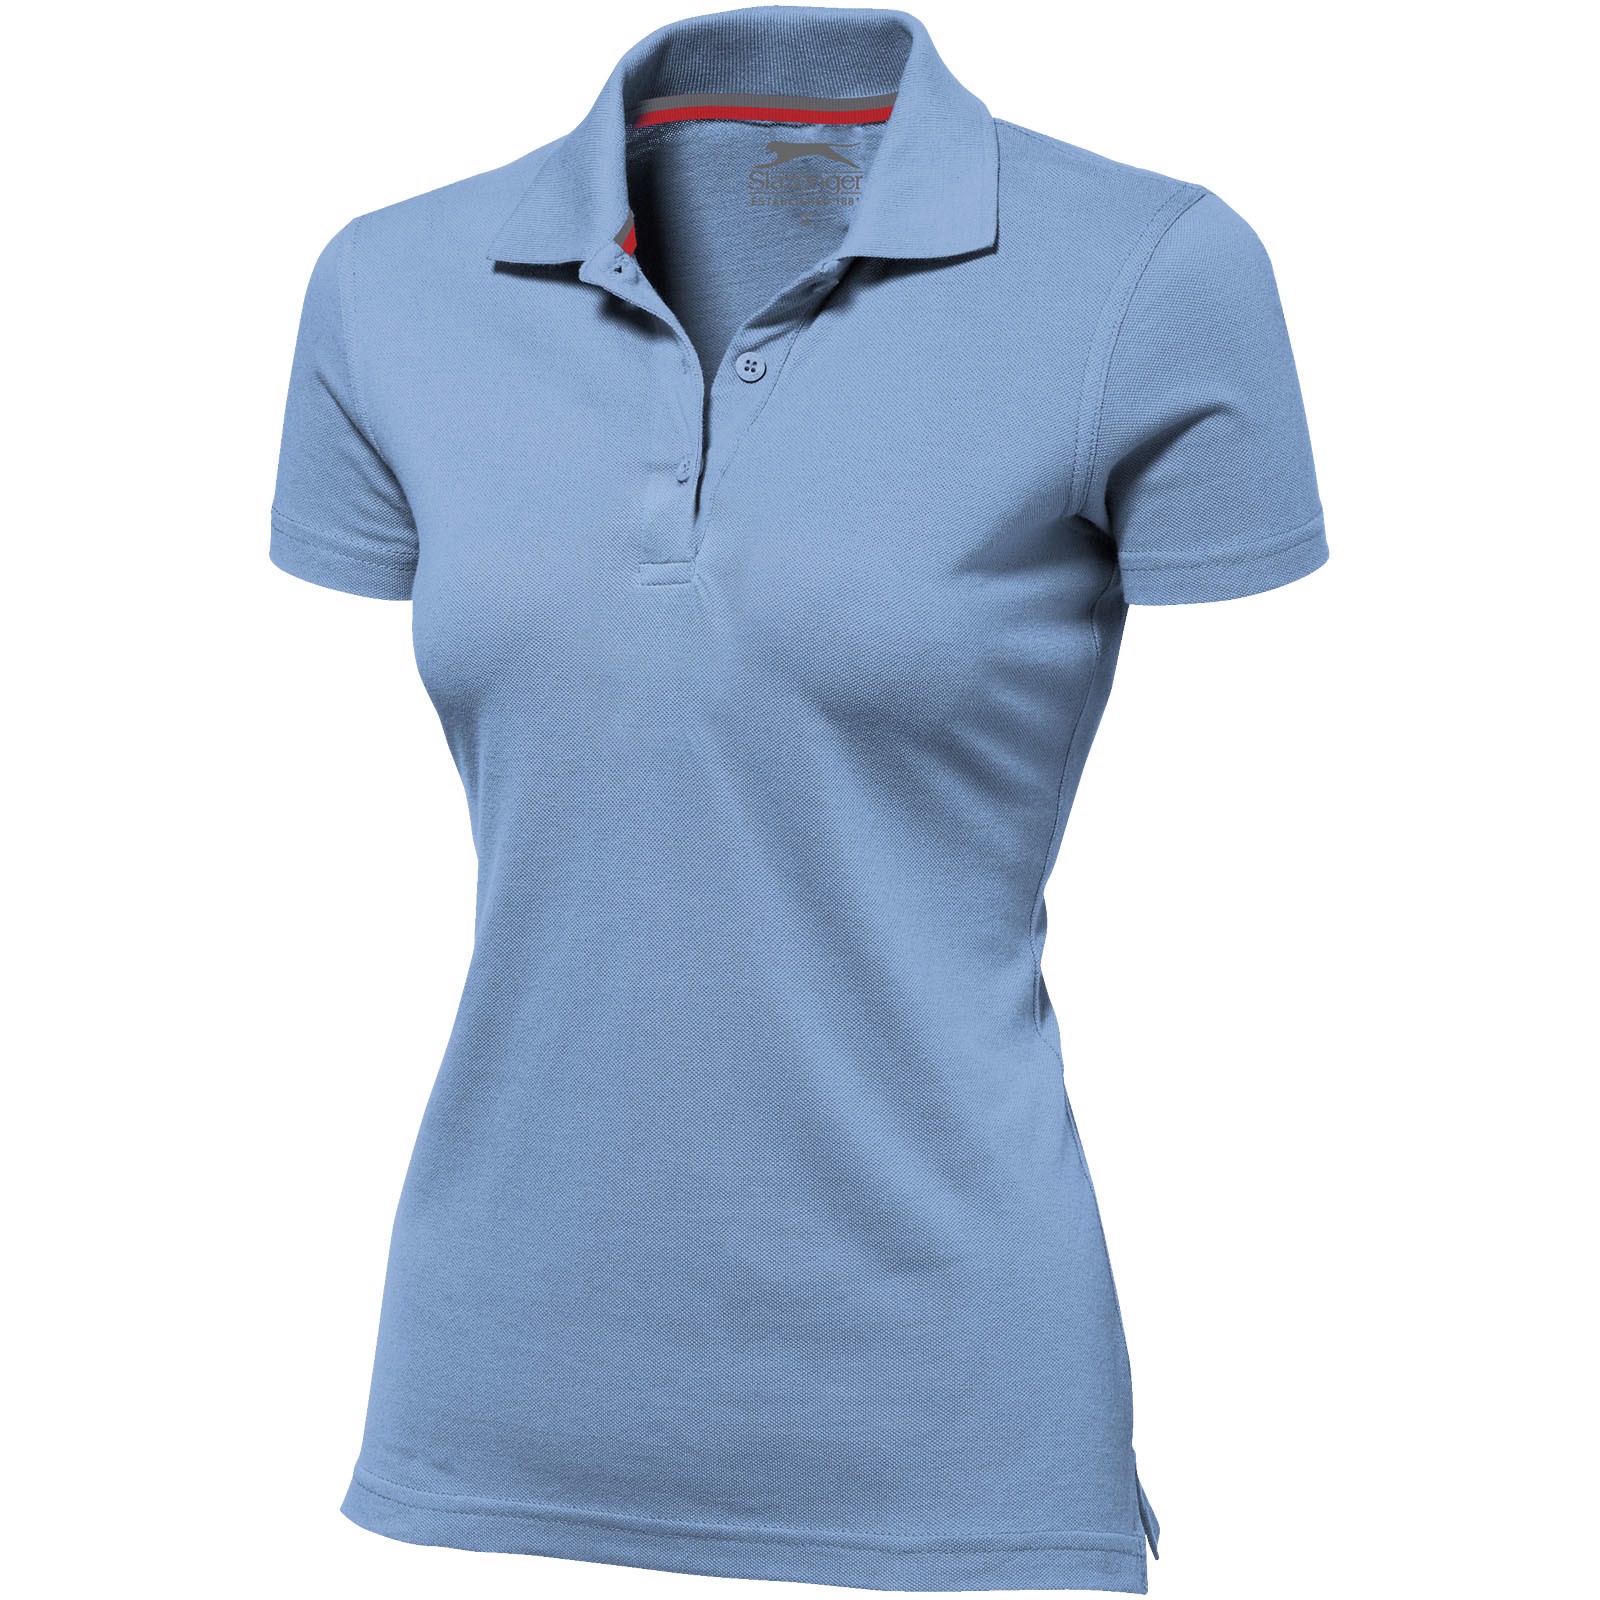 Advantage short sleeve women's polo - Light Blue / S